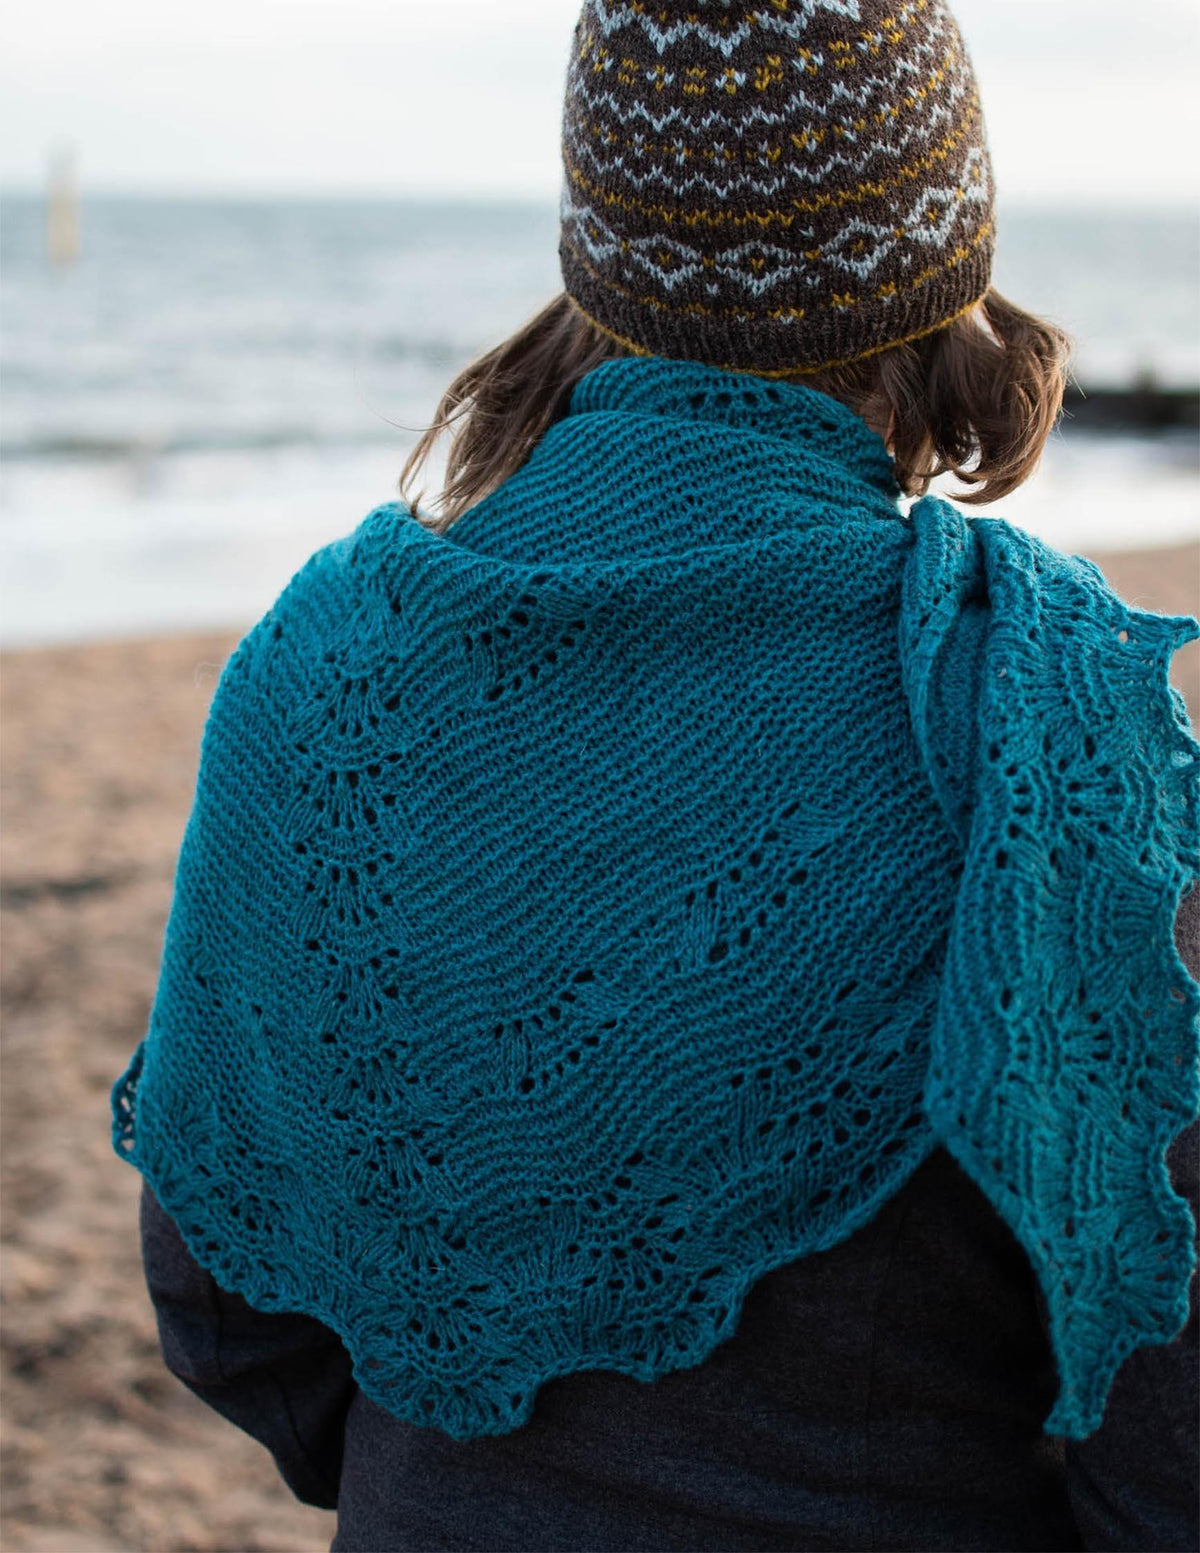 Ysolda, modern knitting patterns, free tutorials